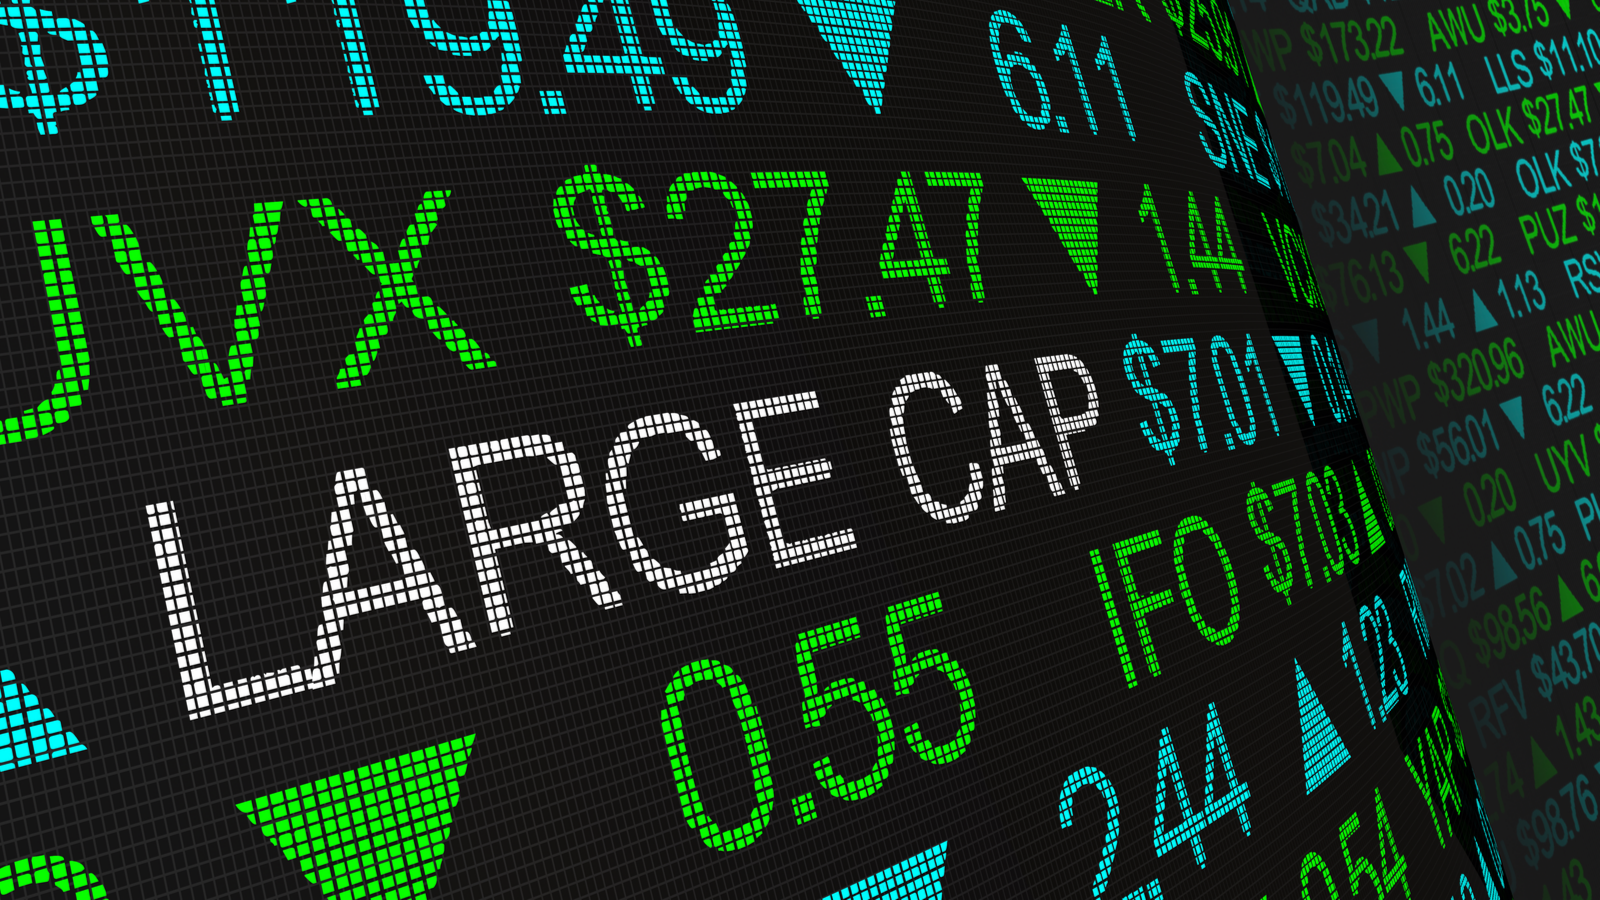 7 BeatenDown LargeCap Stocks to Buy Now InvestorPlace